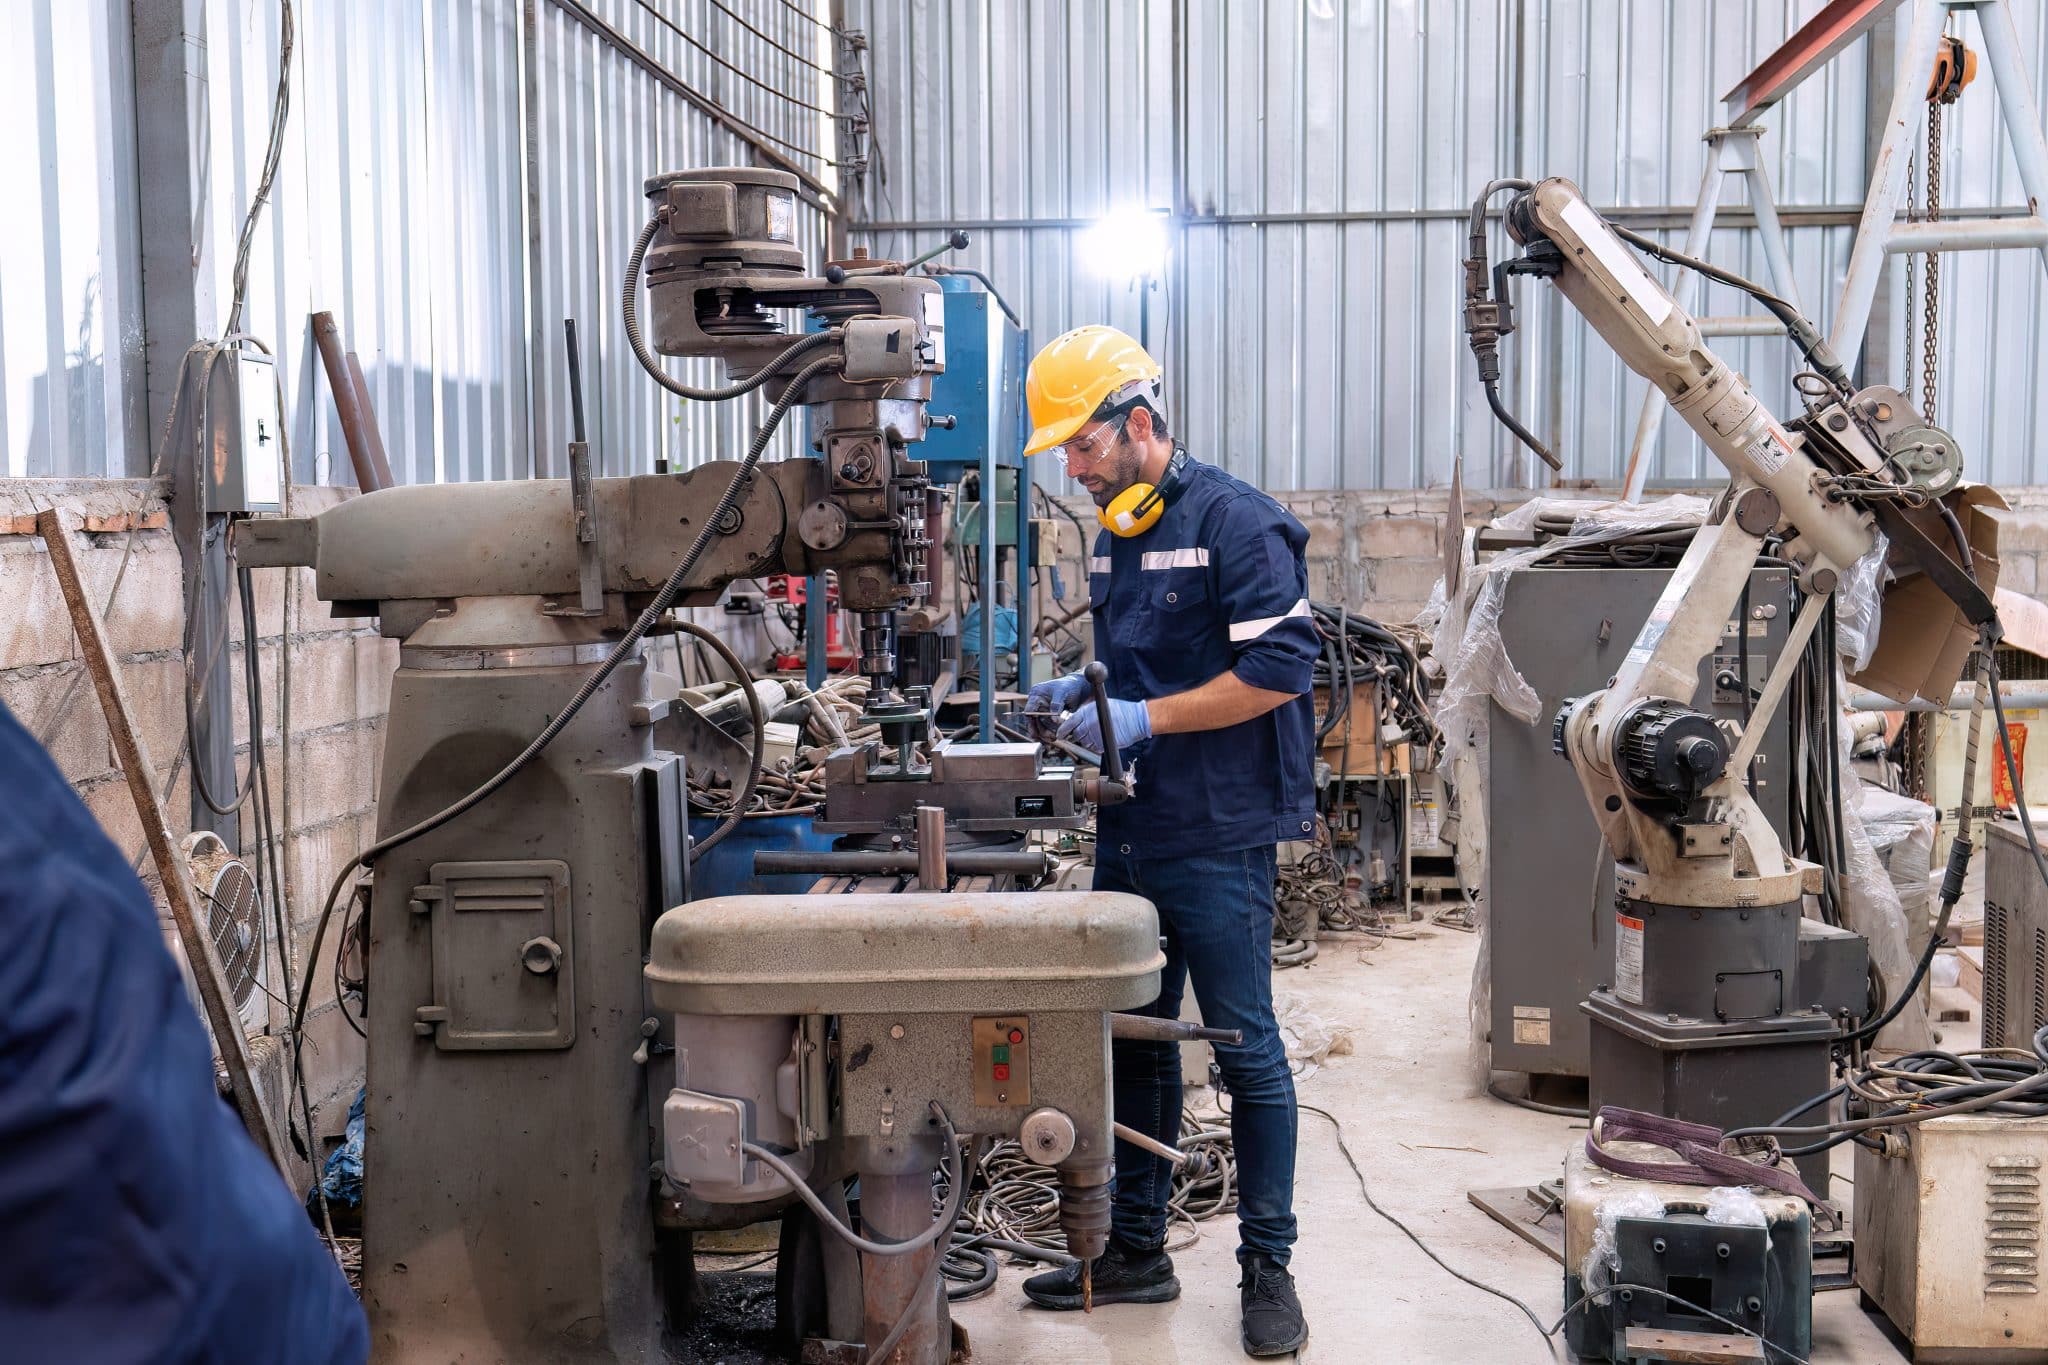 In robotic repair shop engineer use drilling machine fabricate part and vernier caliper measuring